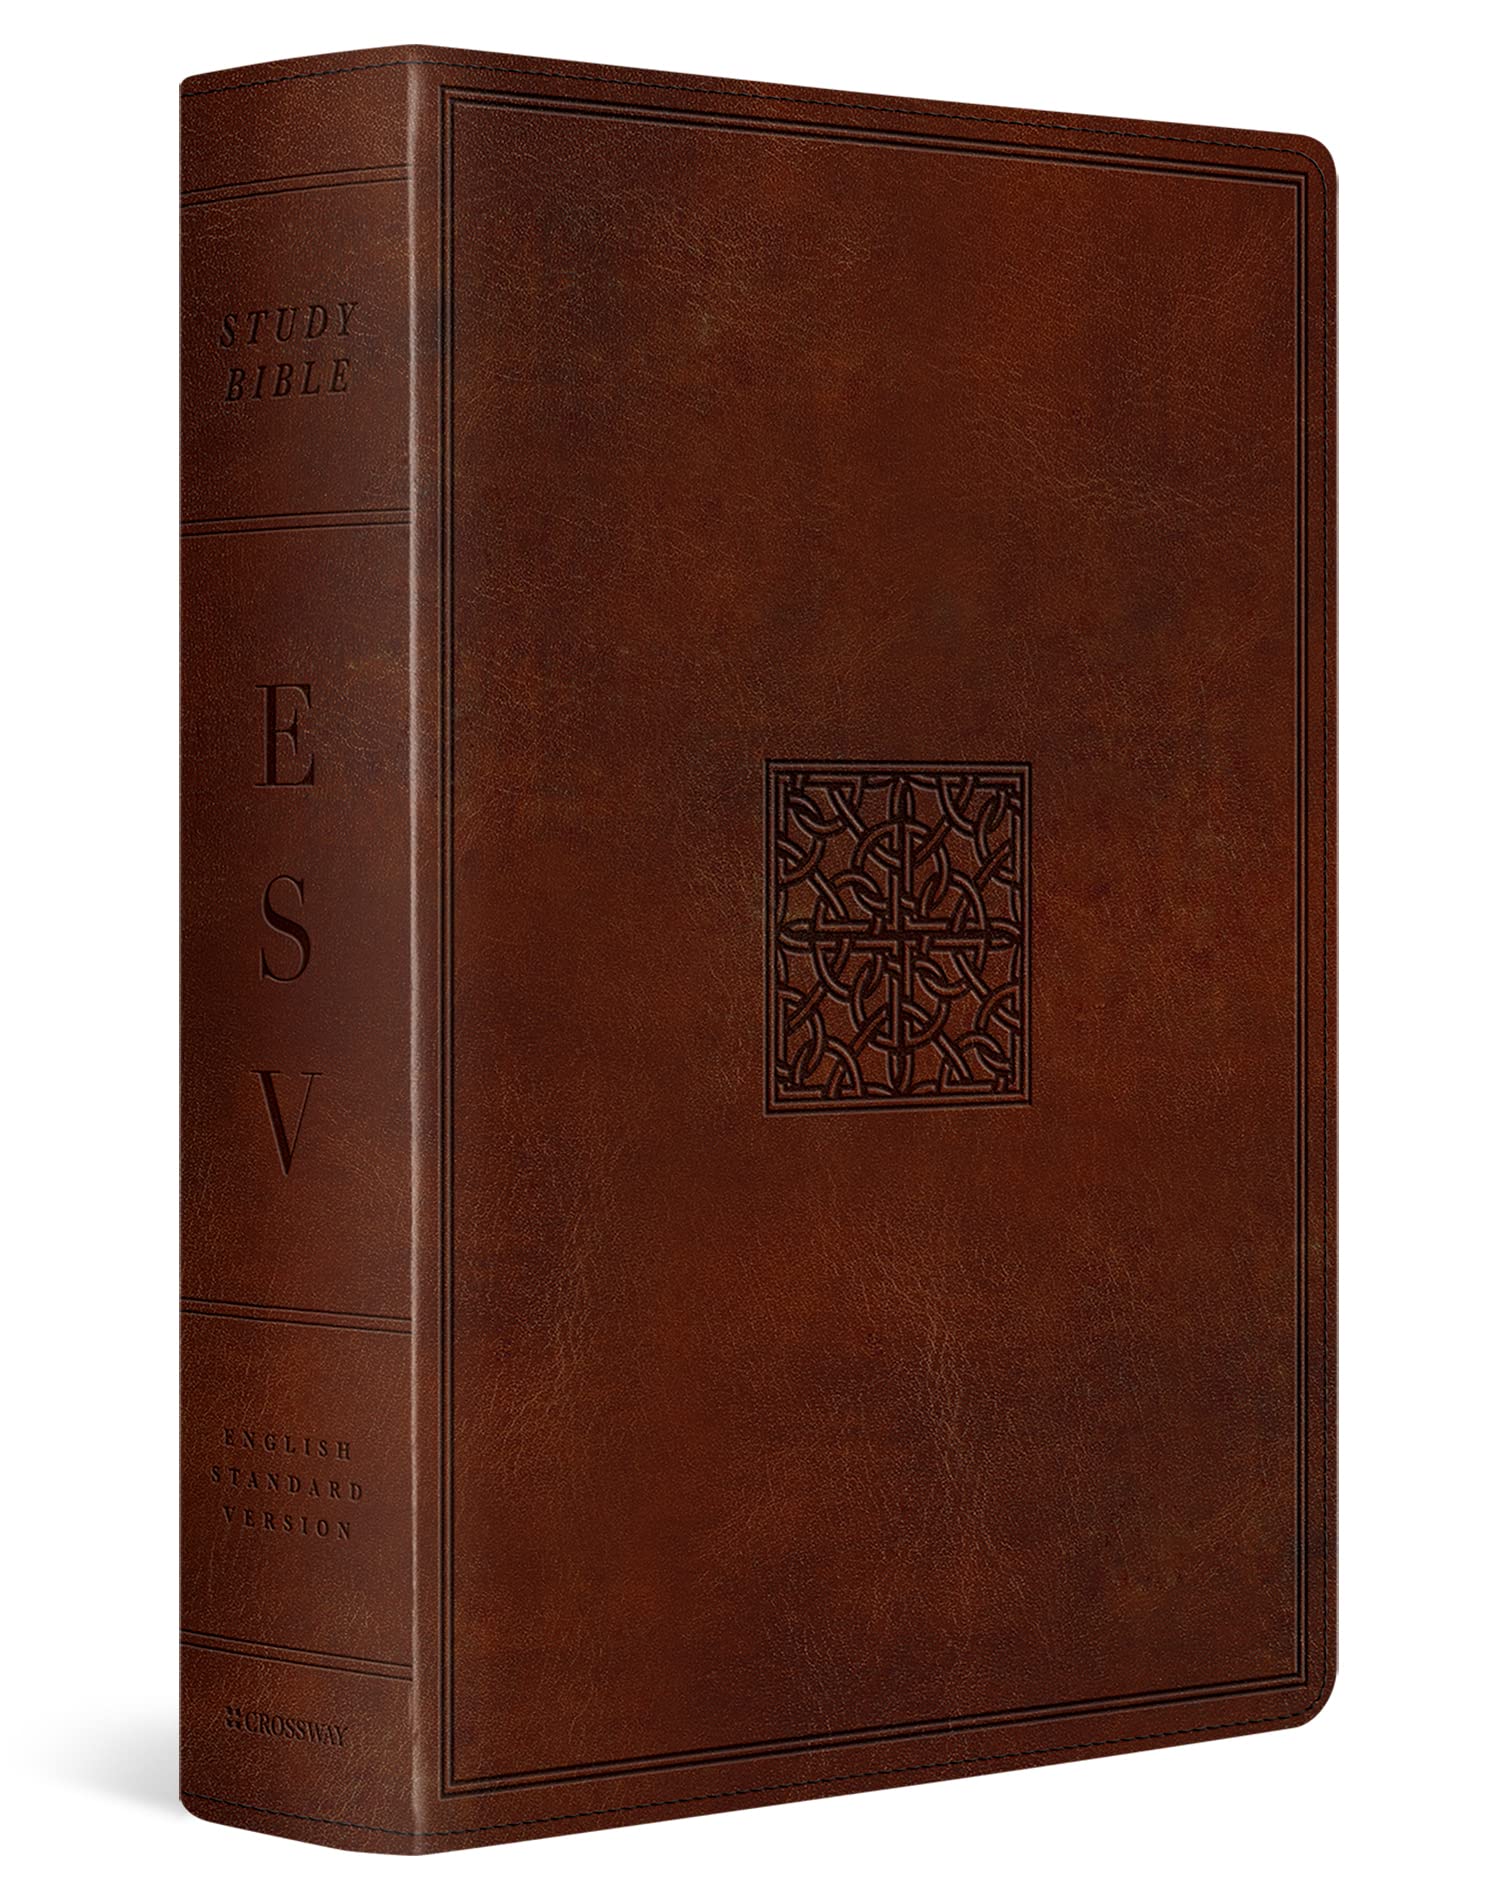 Study Bible-ESV-Celtic Imprint Design by Crossway Bibles